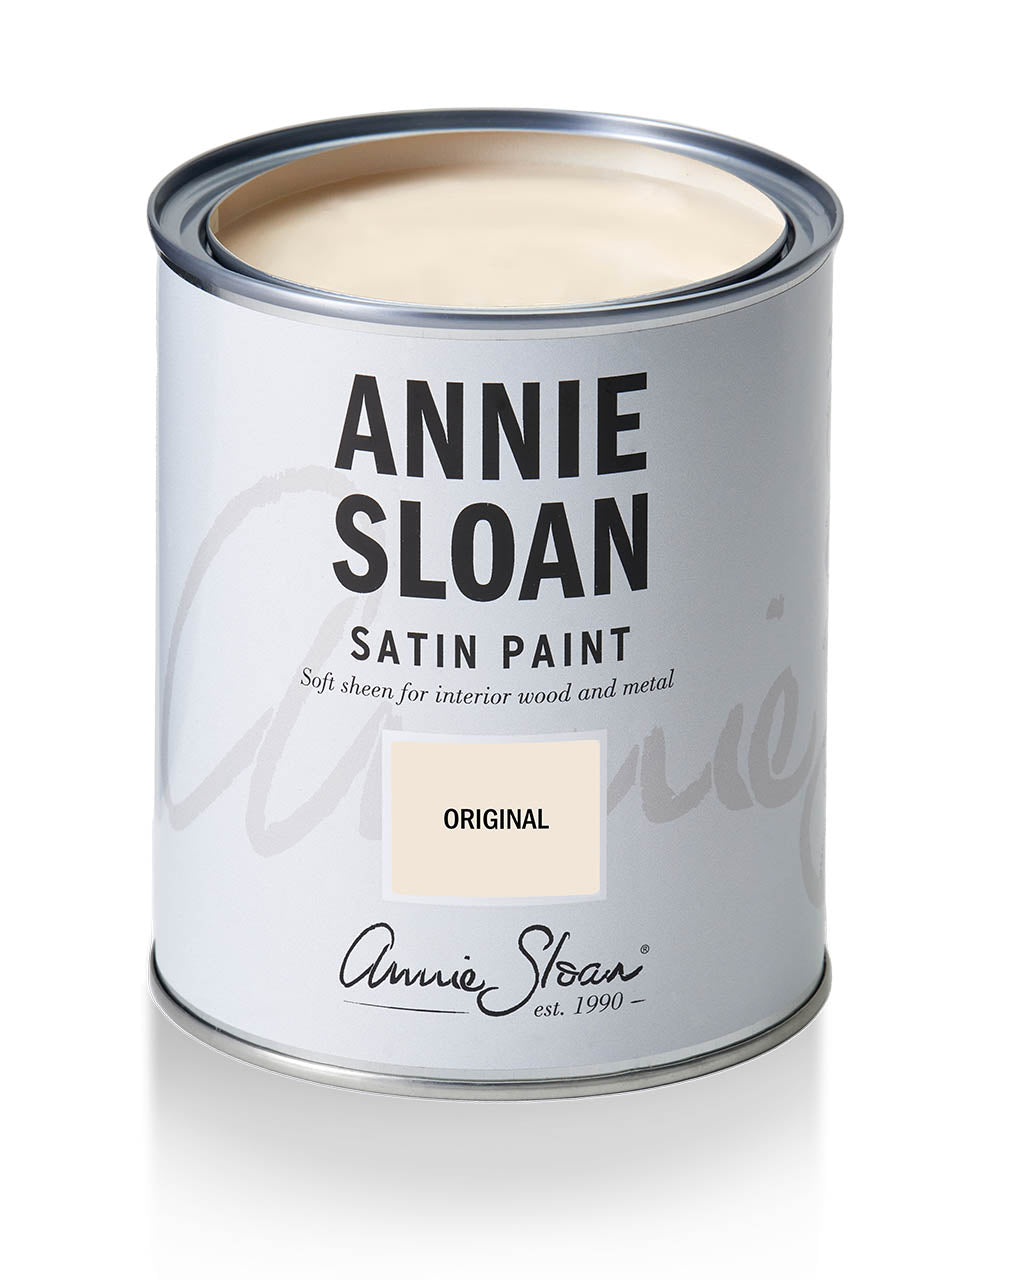 Original Satin Paint by Annie Sloan